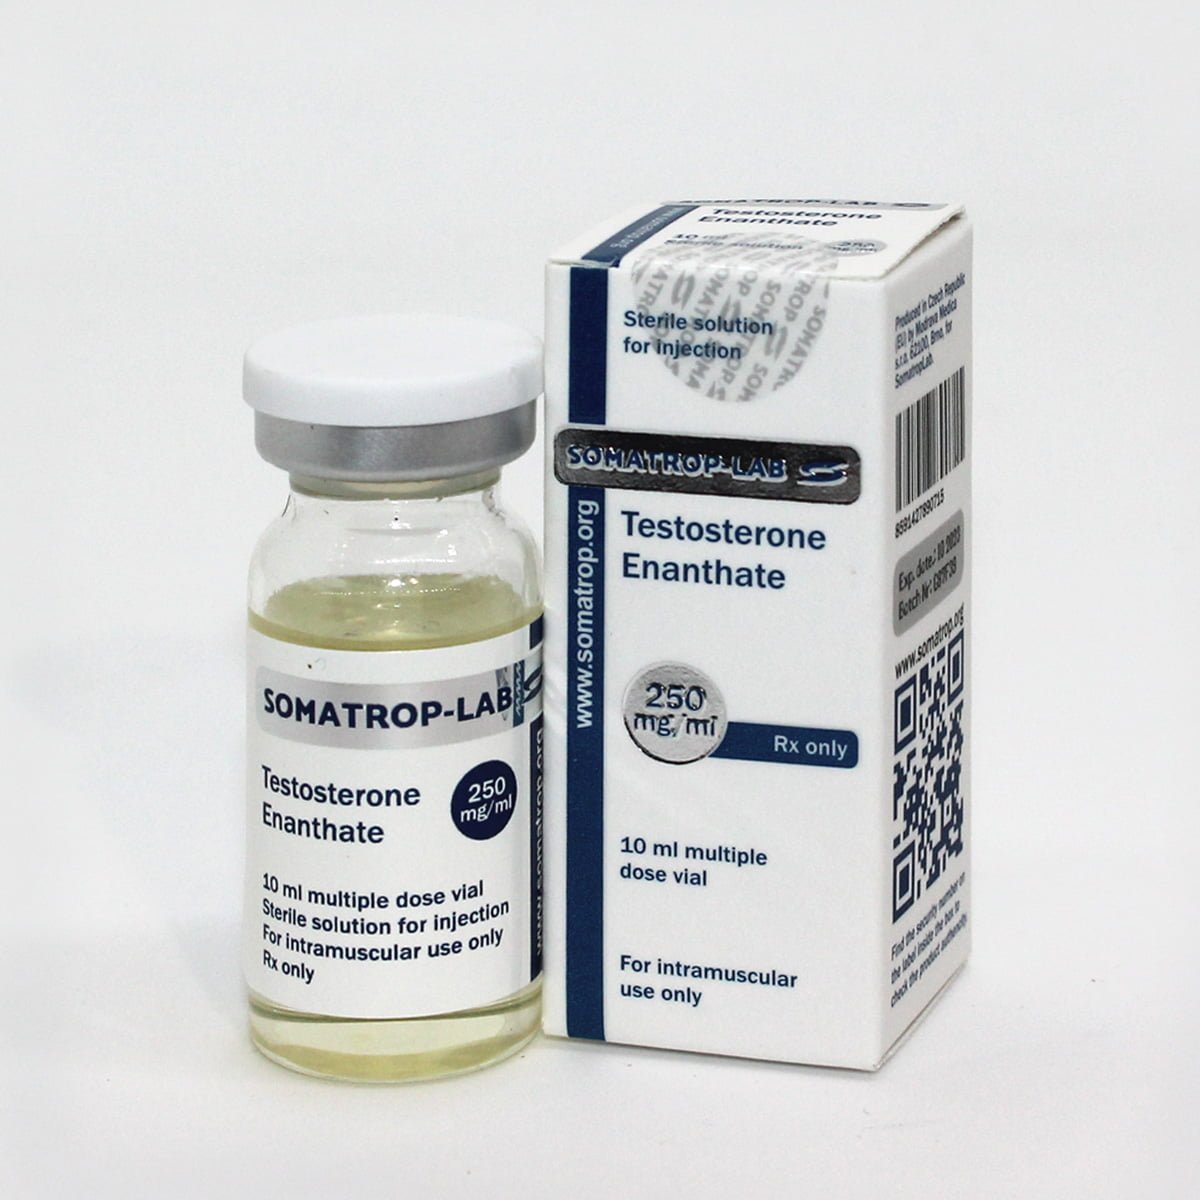 Somatrop-Lab Testosterone Enanthate